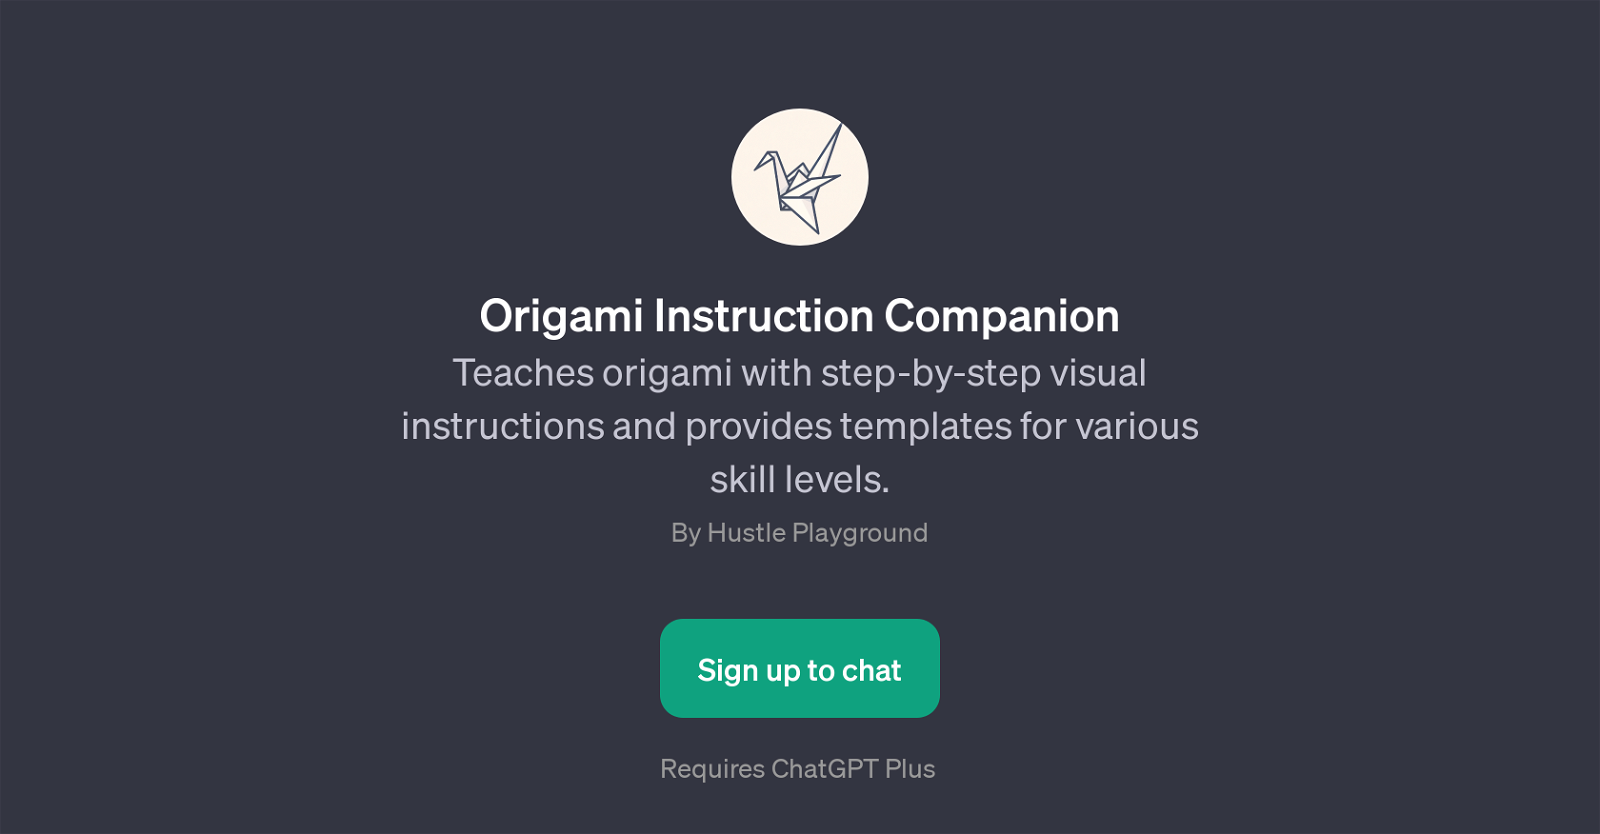 Origami Instruction Companion website